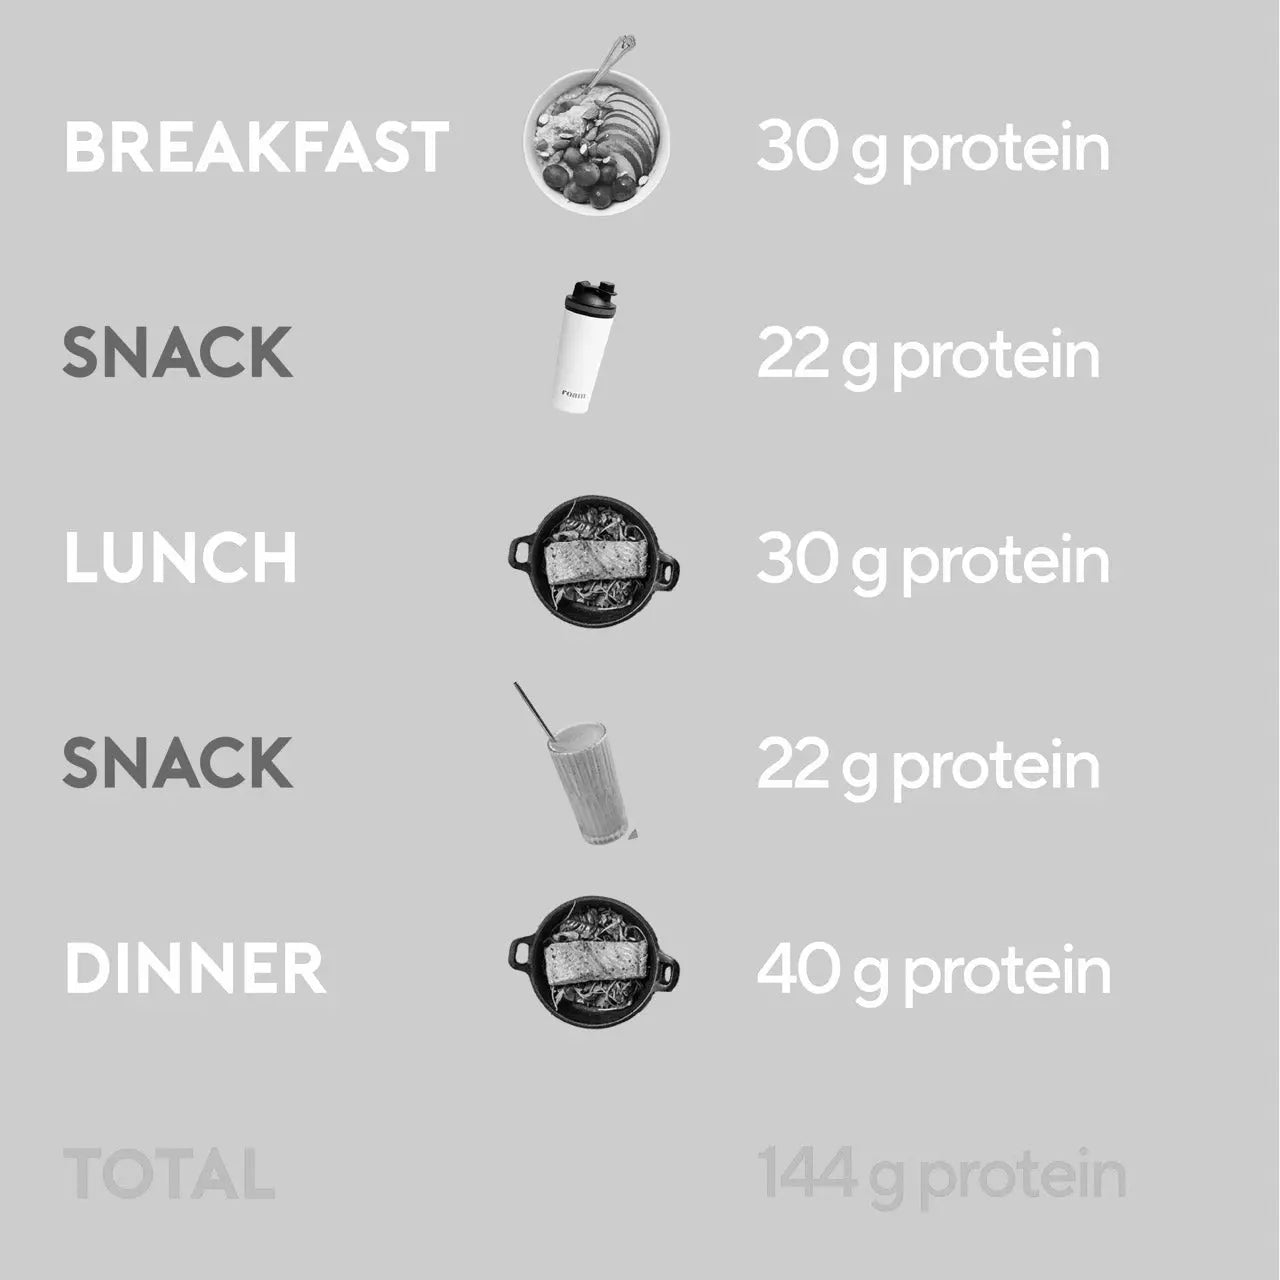 Daily Protein Intake by Body Weight Roam NZ